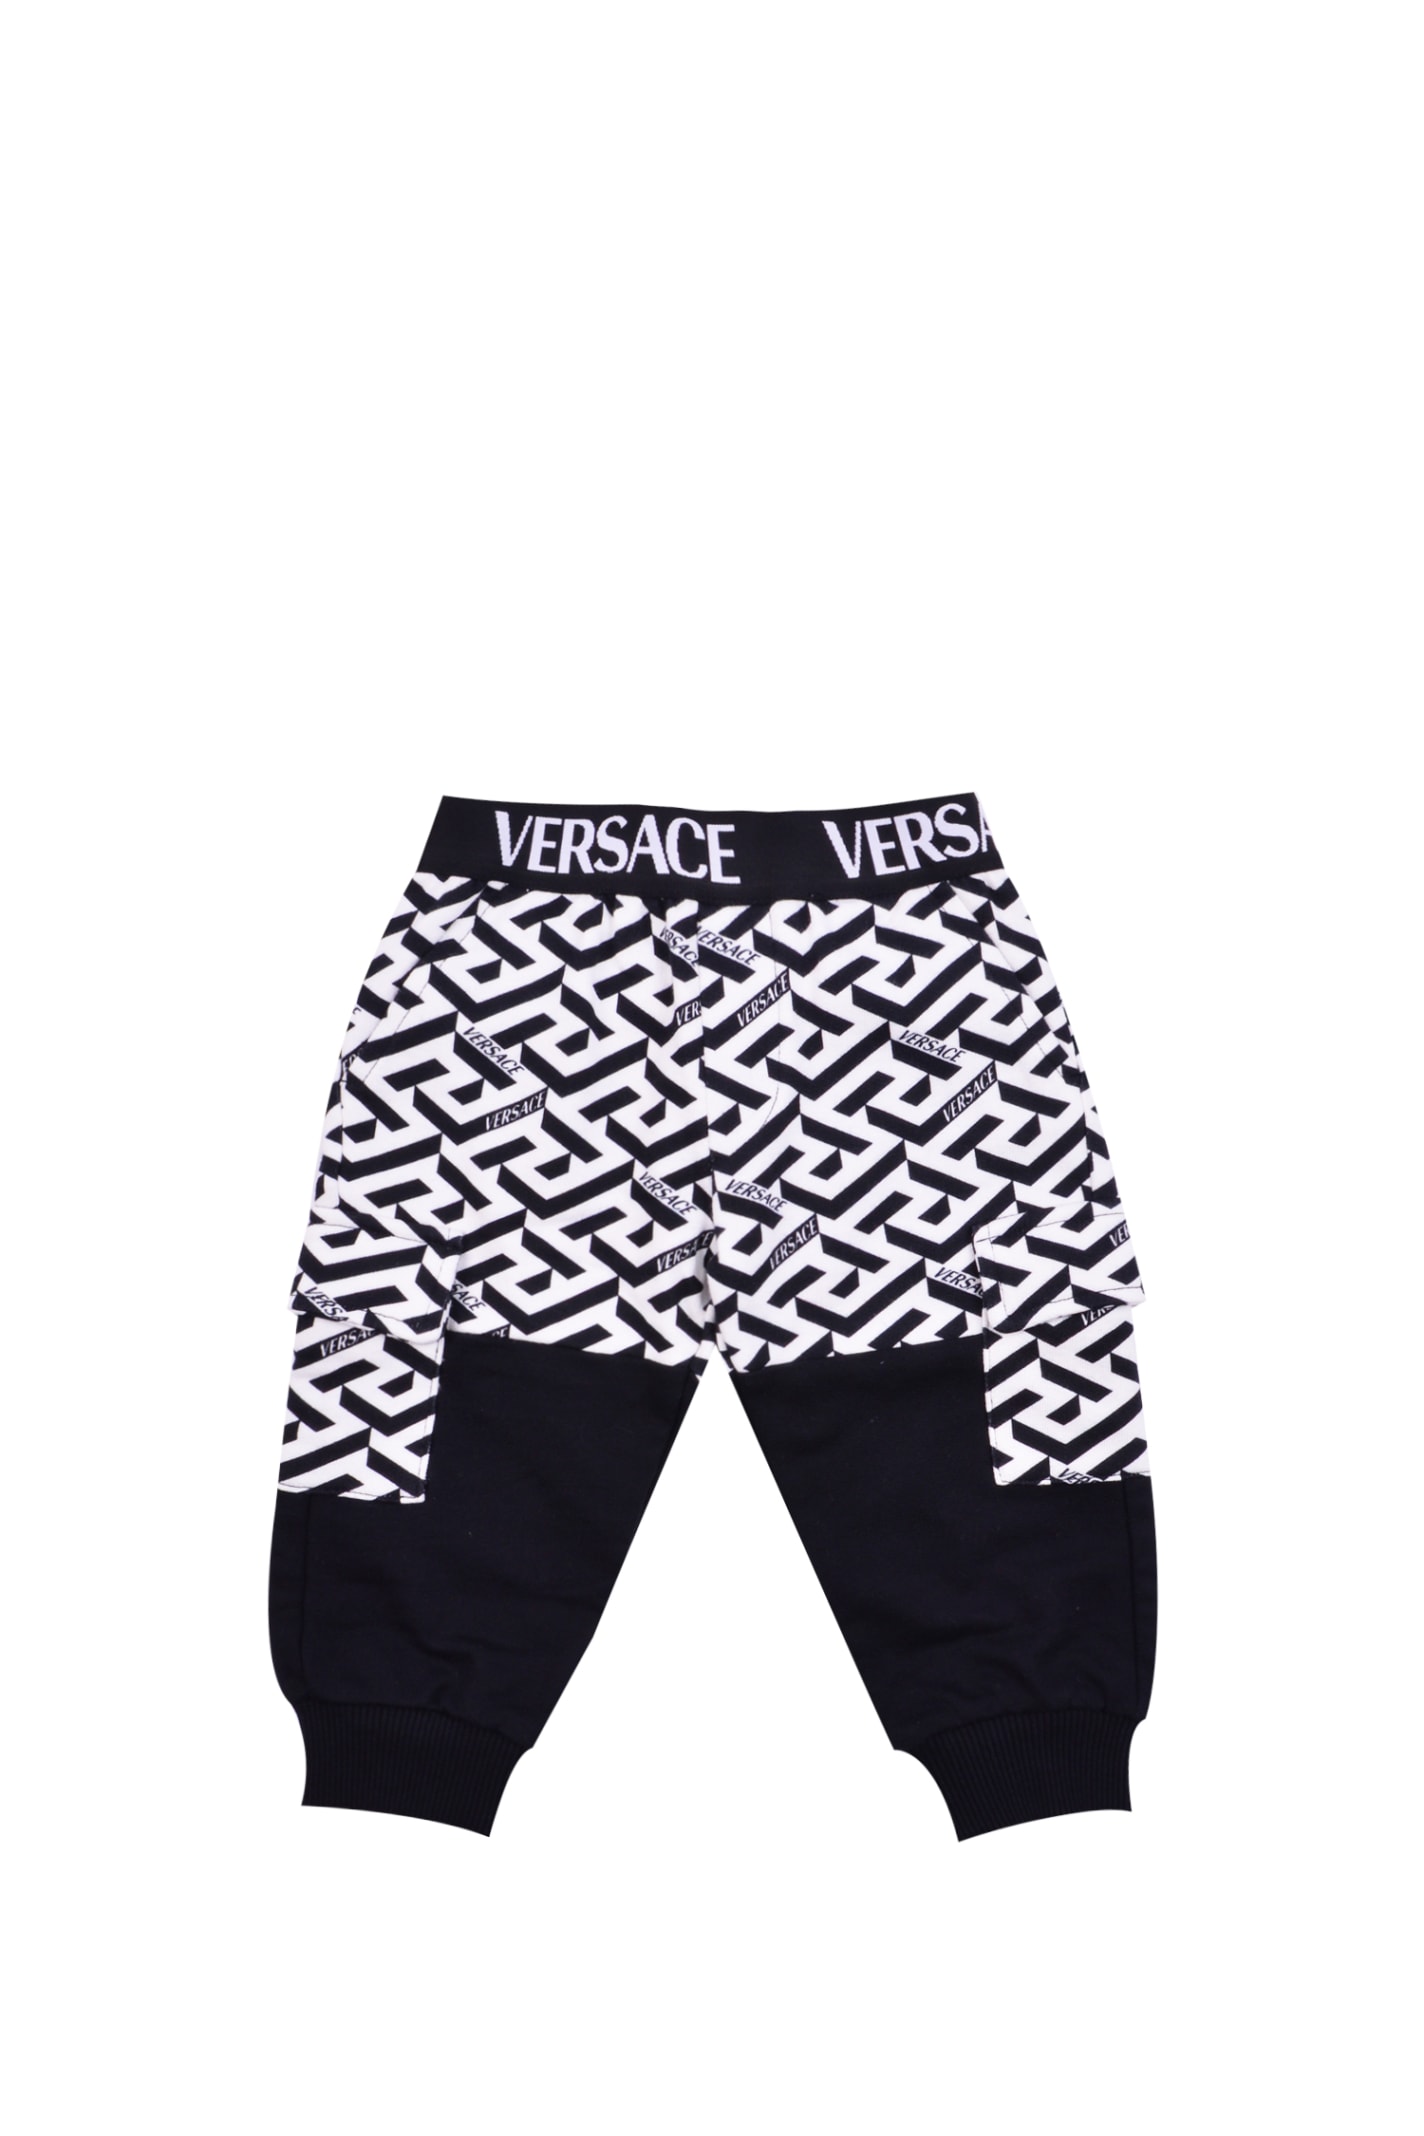 Versace Cotton Pants With Print